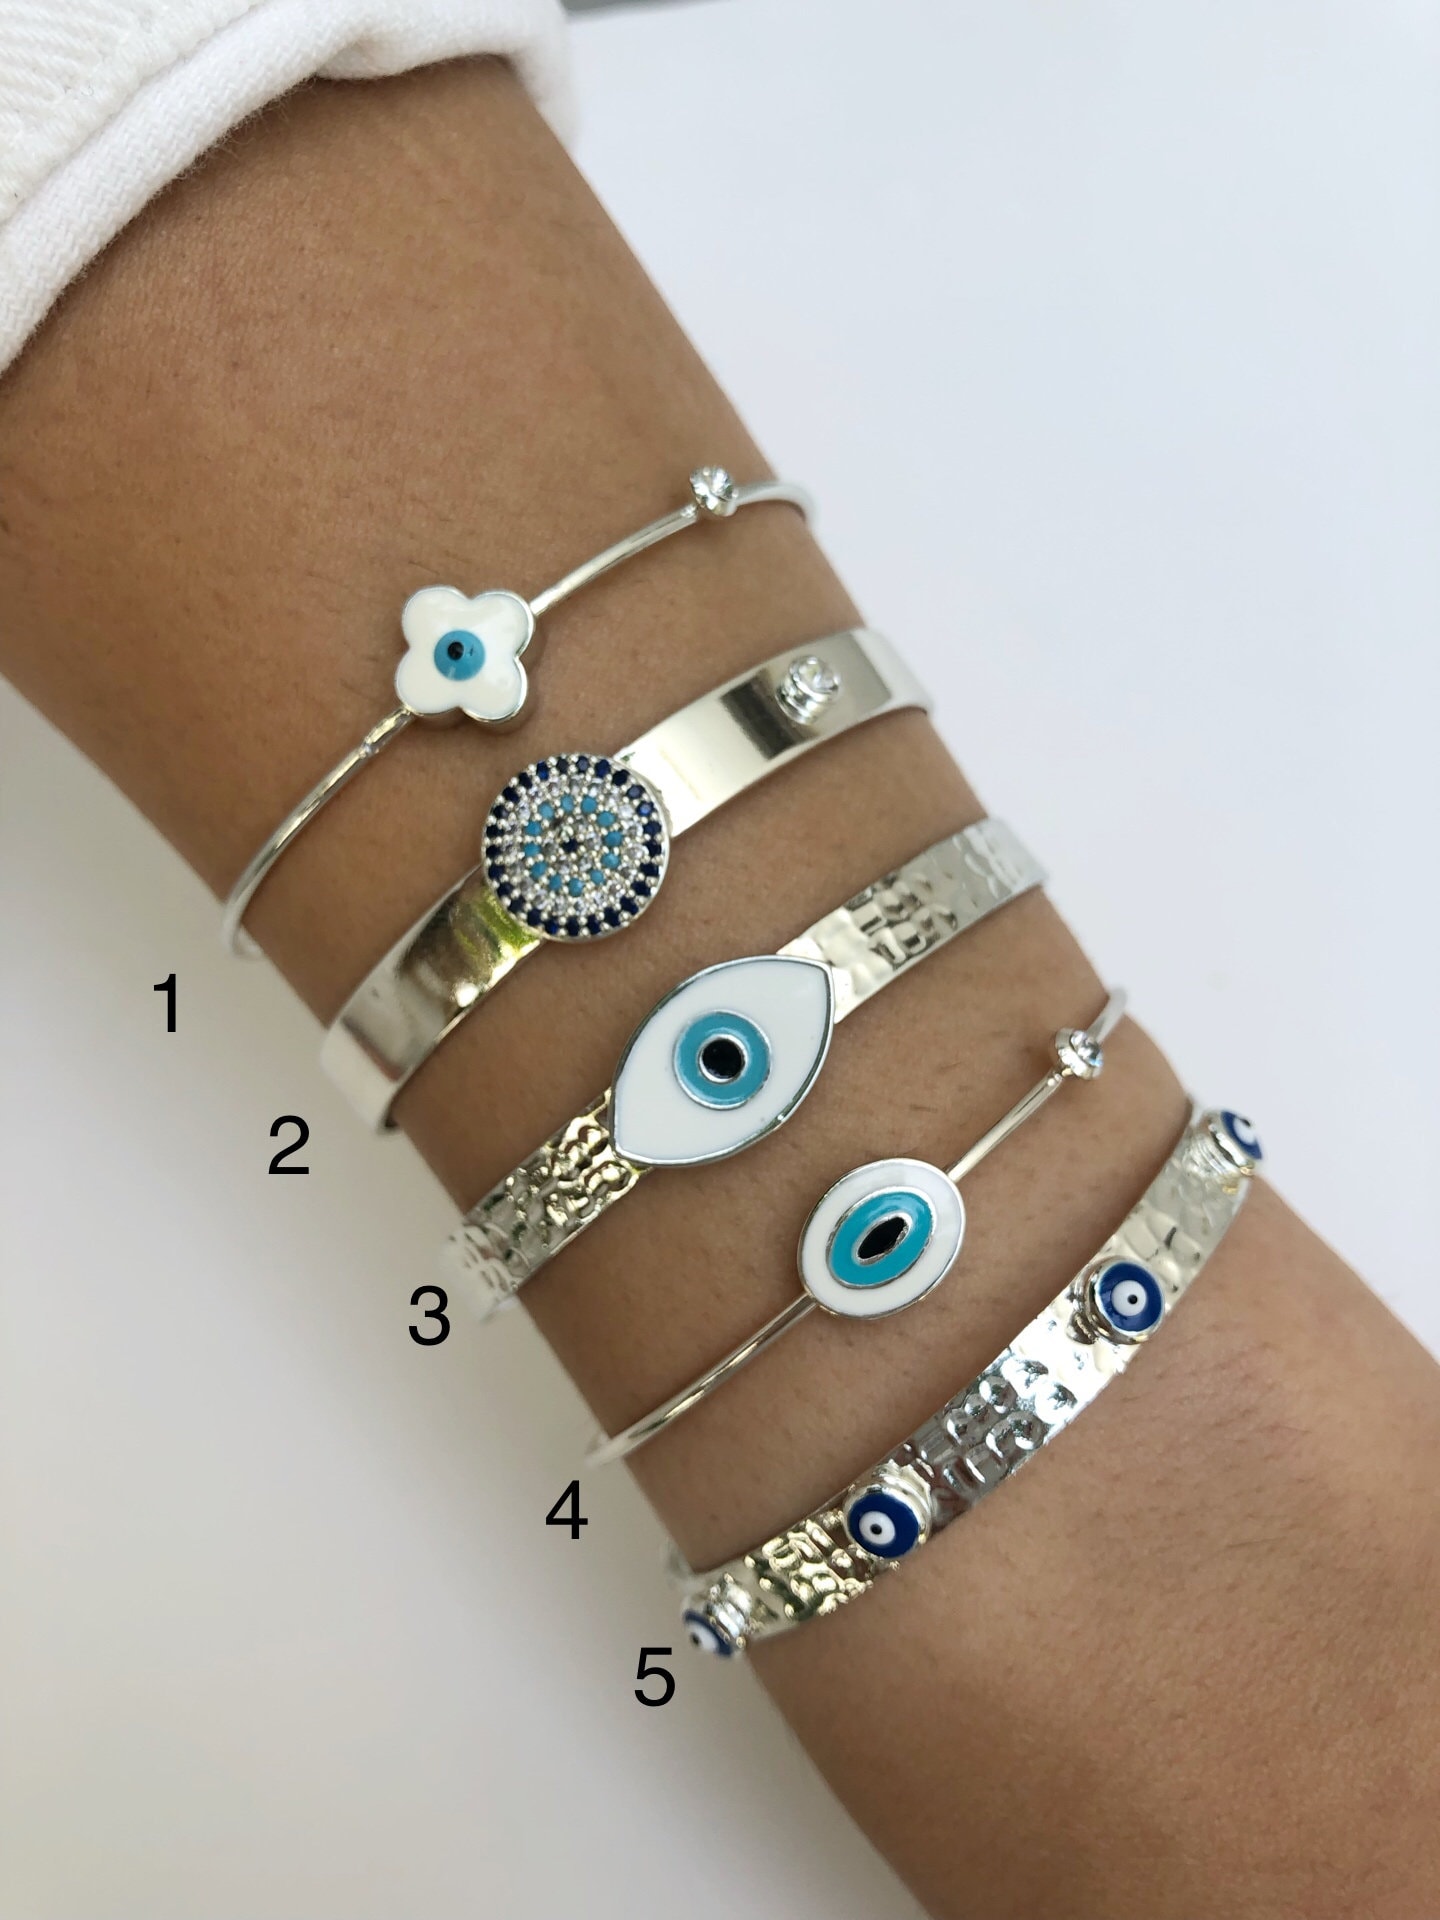 450 Wholesale Evil Eye Beads for Bracelets Necklace，Bulk Evil Eye